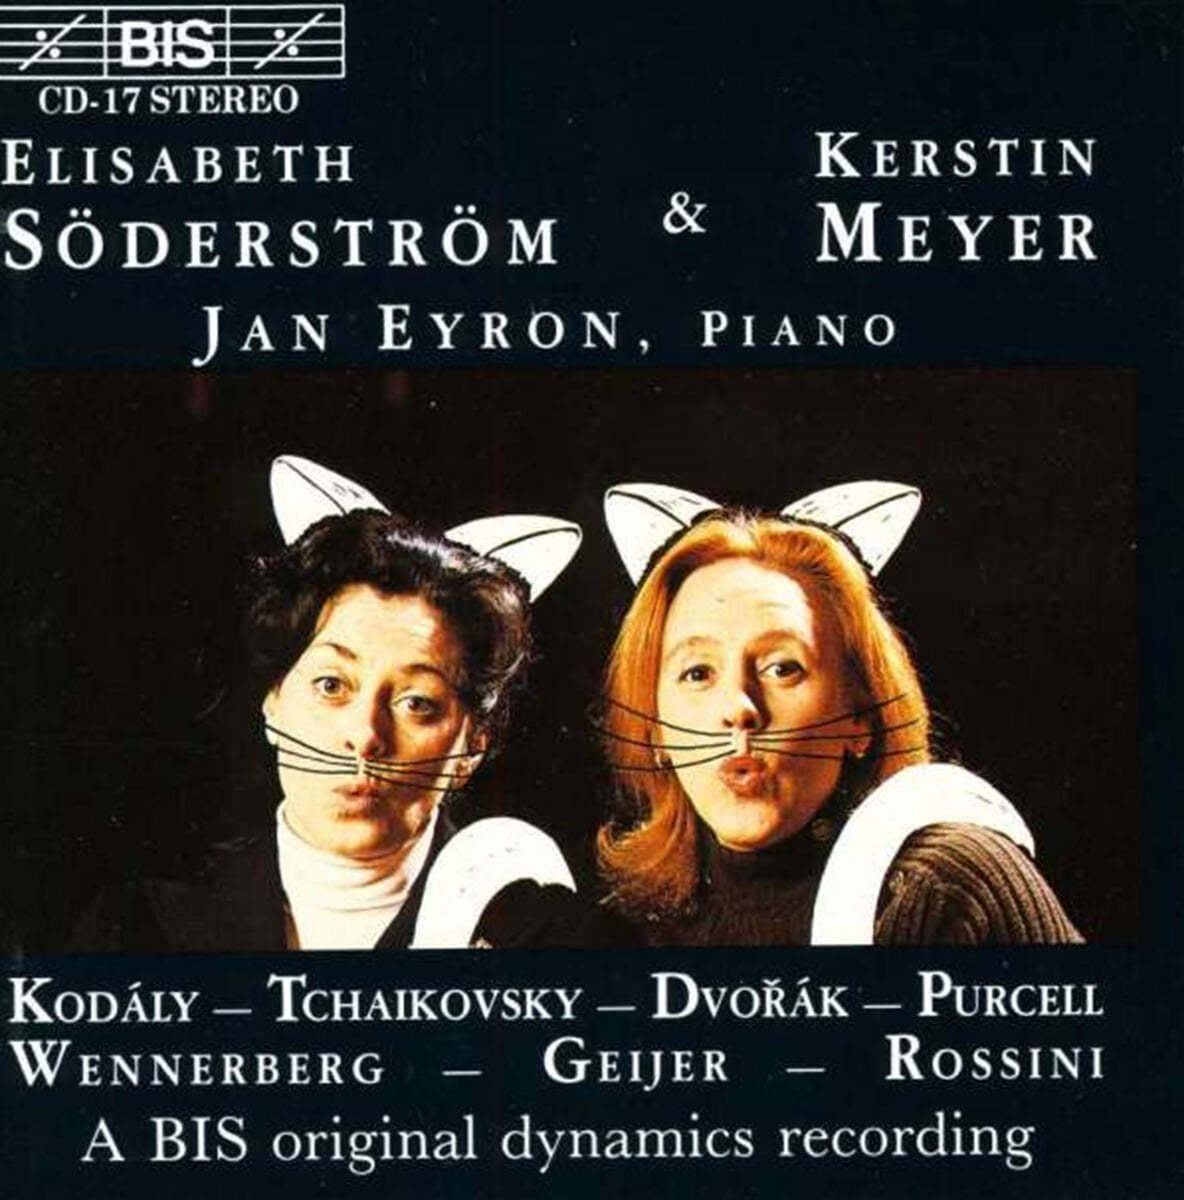 Elisabeth Soderstrom / Kerstin Meyer 코다이 / 차이코프스키 / 드보르작 / 퍼셀: 듀엣 모음 (Kodaly / Tchaikovsky / Dvorak: Purcell: Duets) 